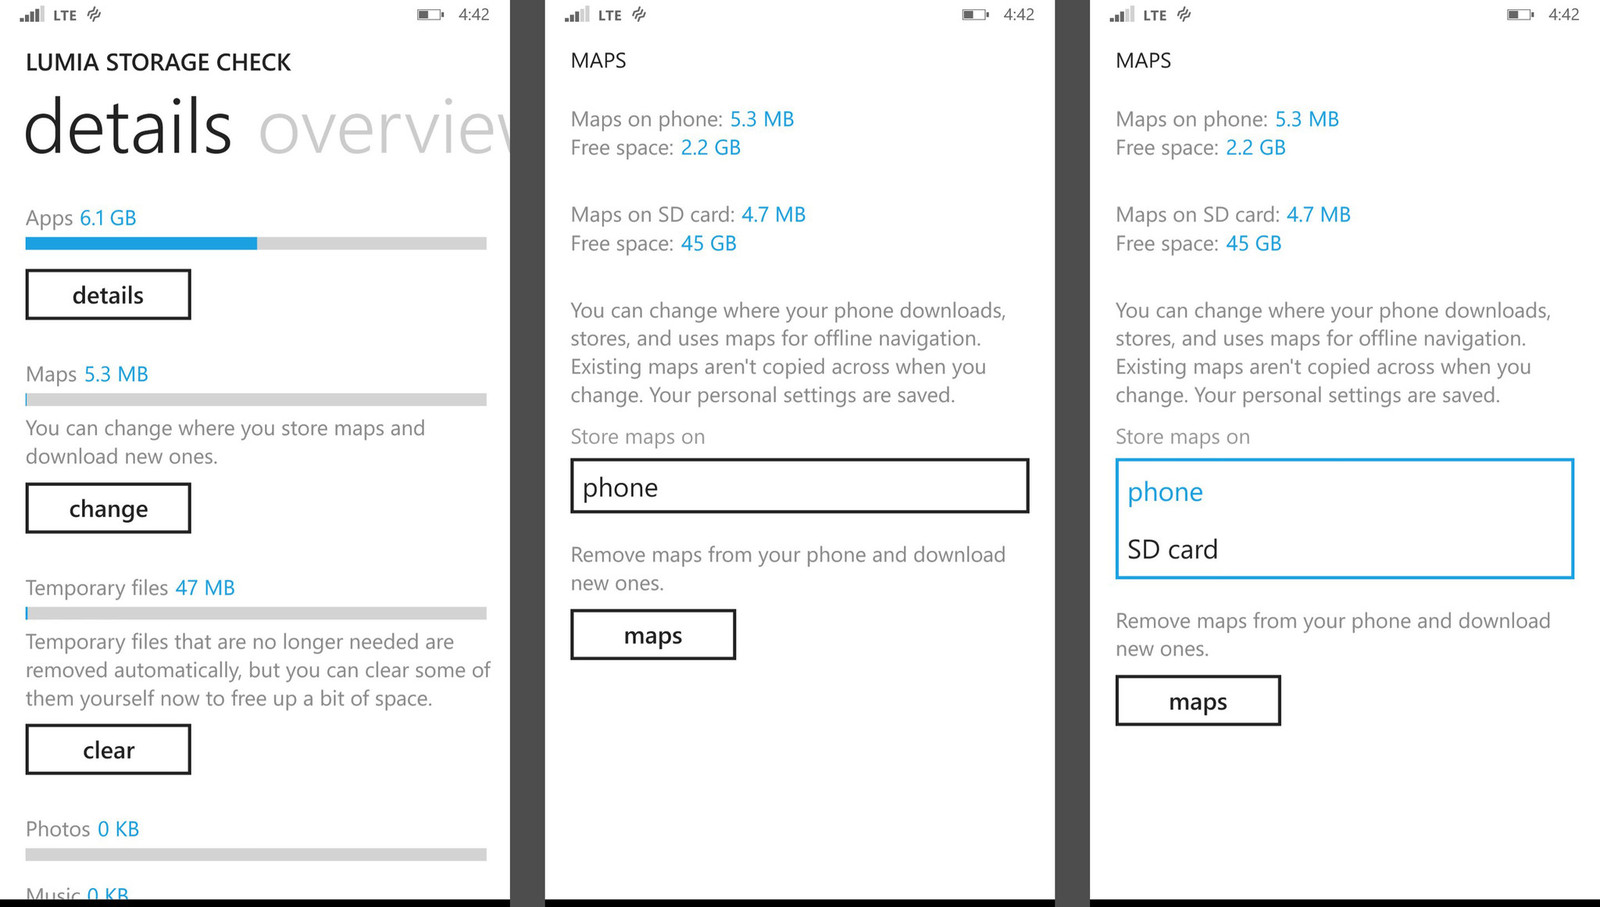 Lumia_Storage_Check_Screenshots